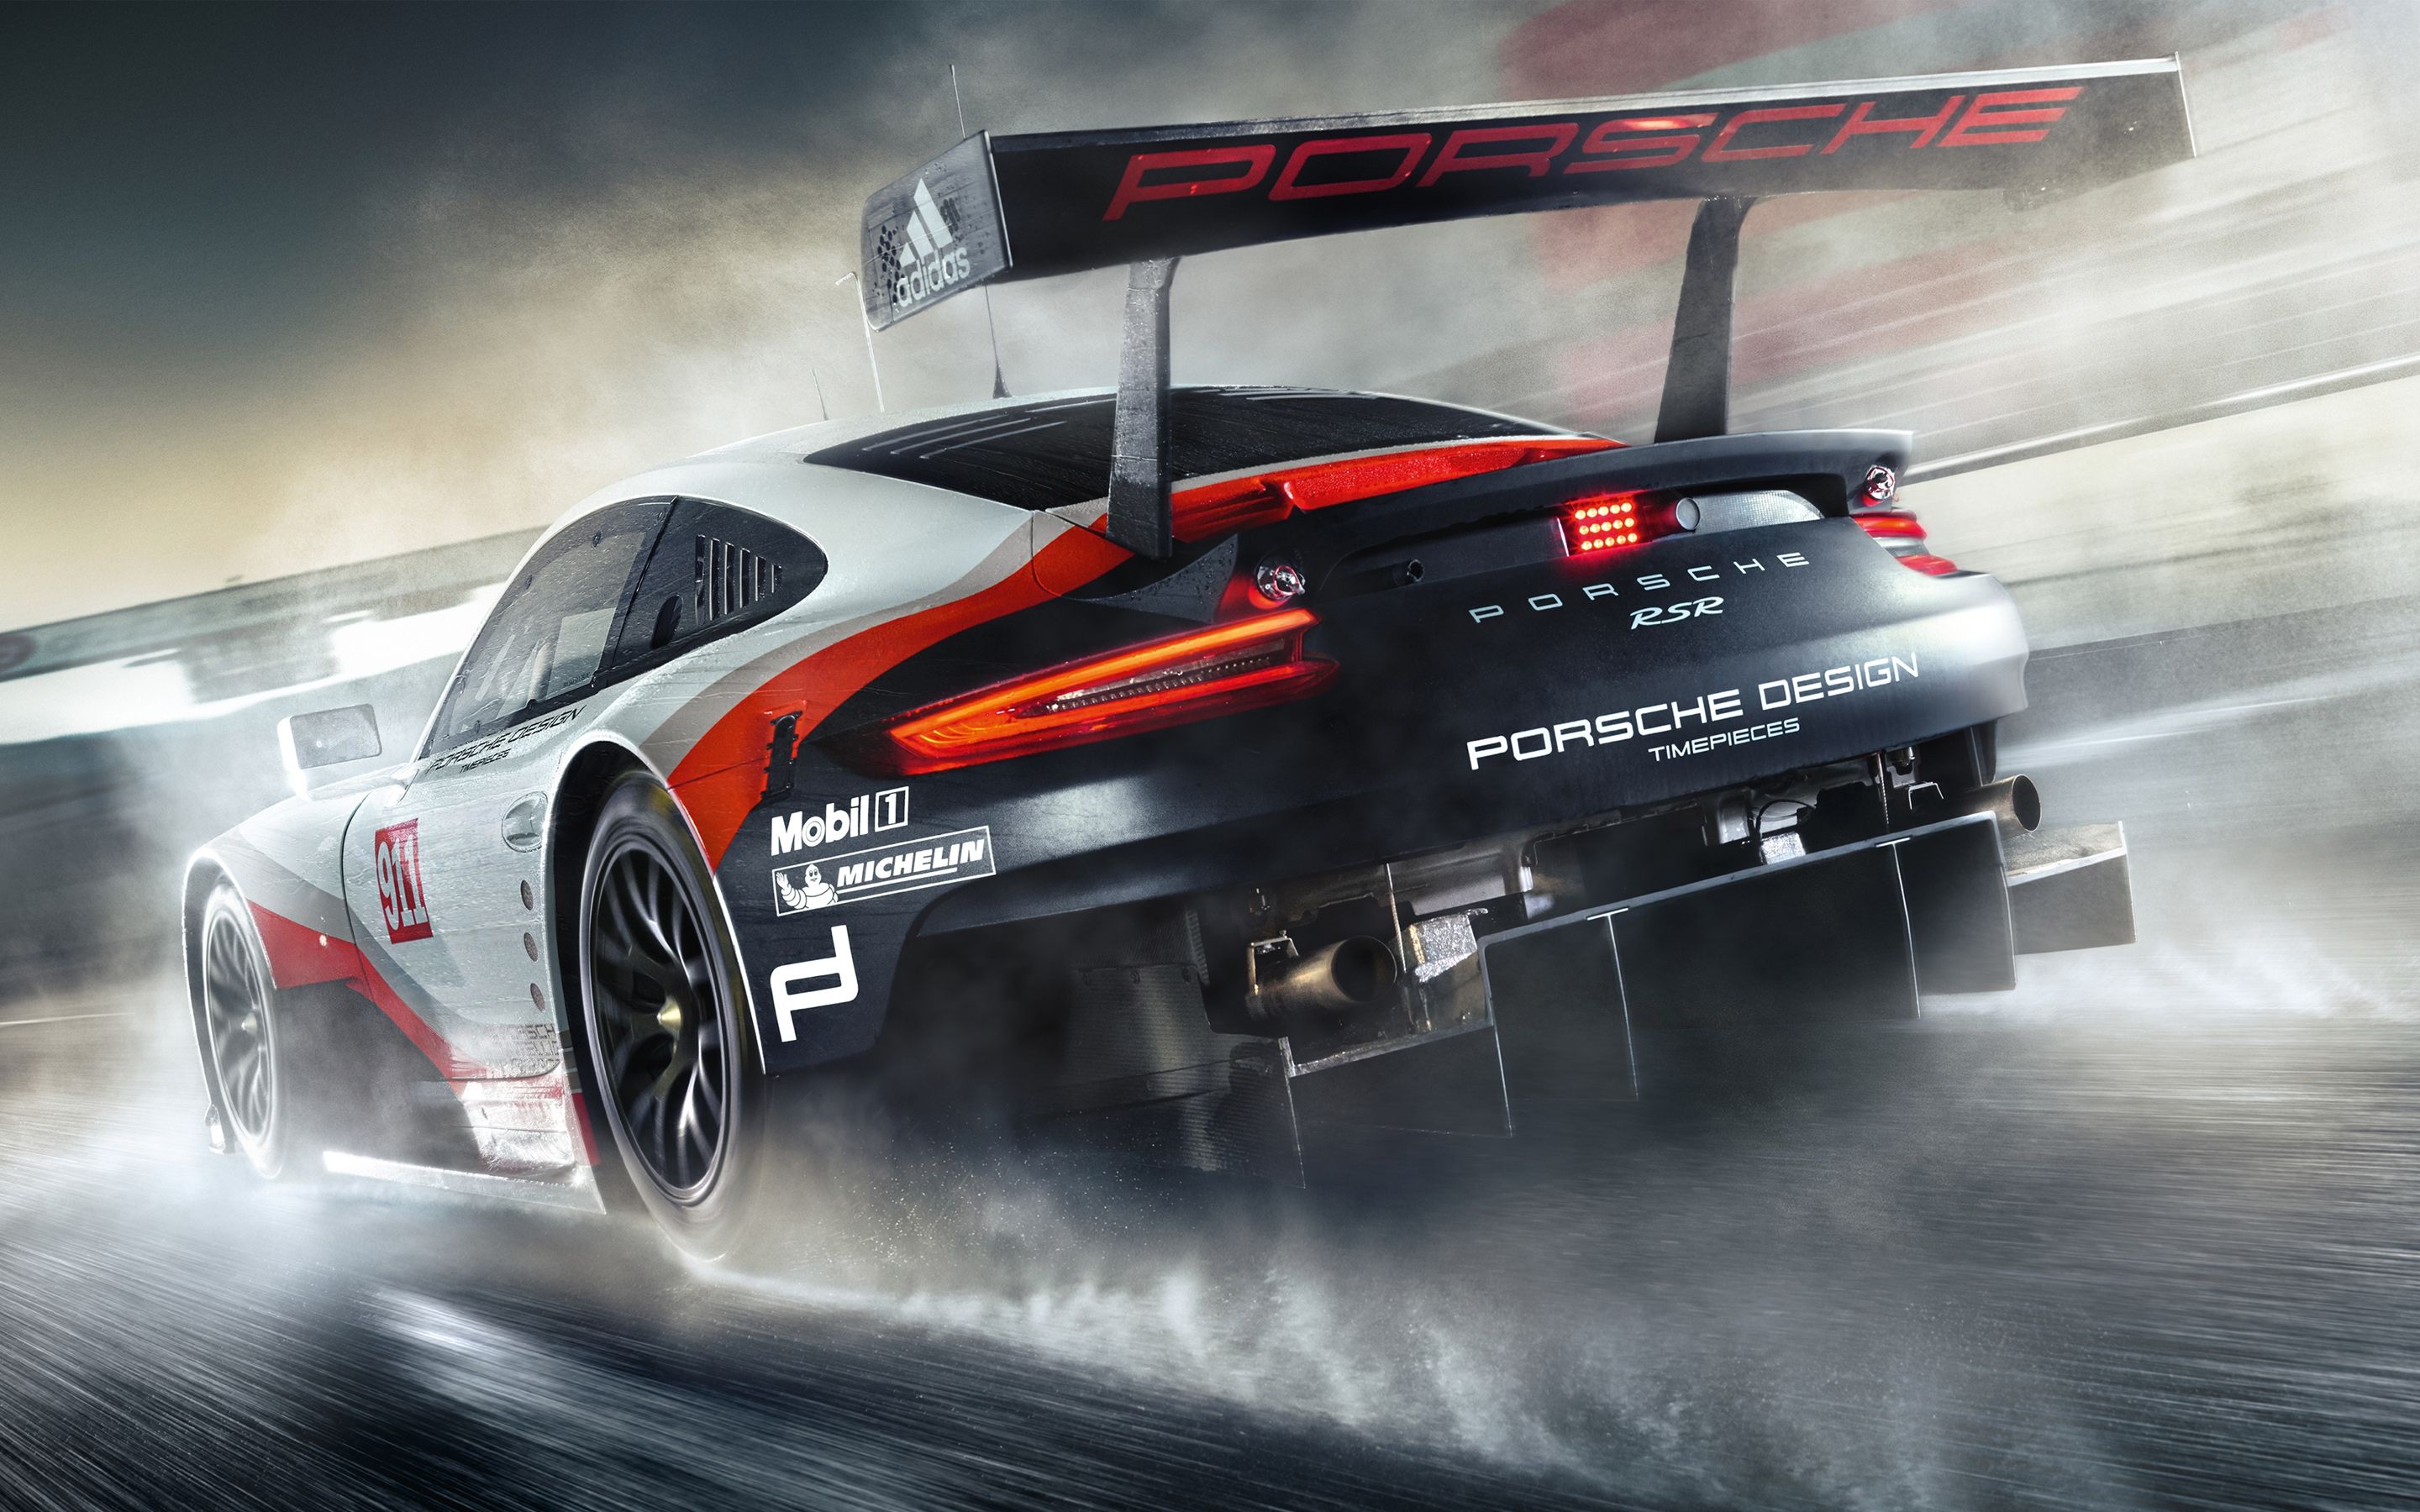 2880x1800 Download 2880x1800 Porsche 911 Rsr Racing Cars Back View